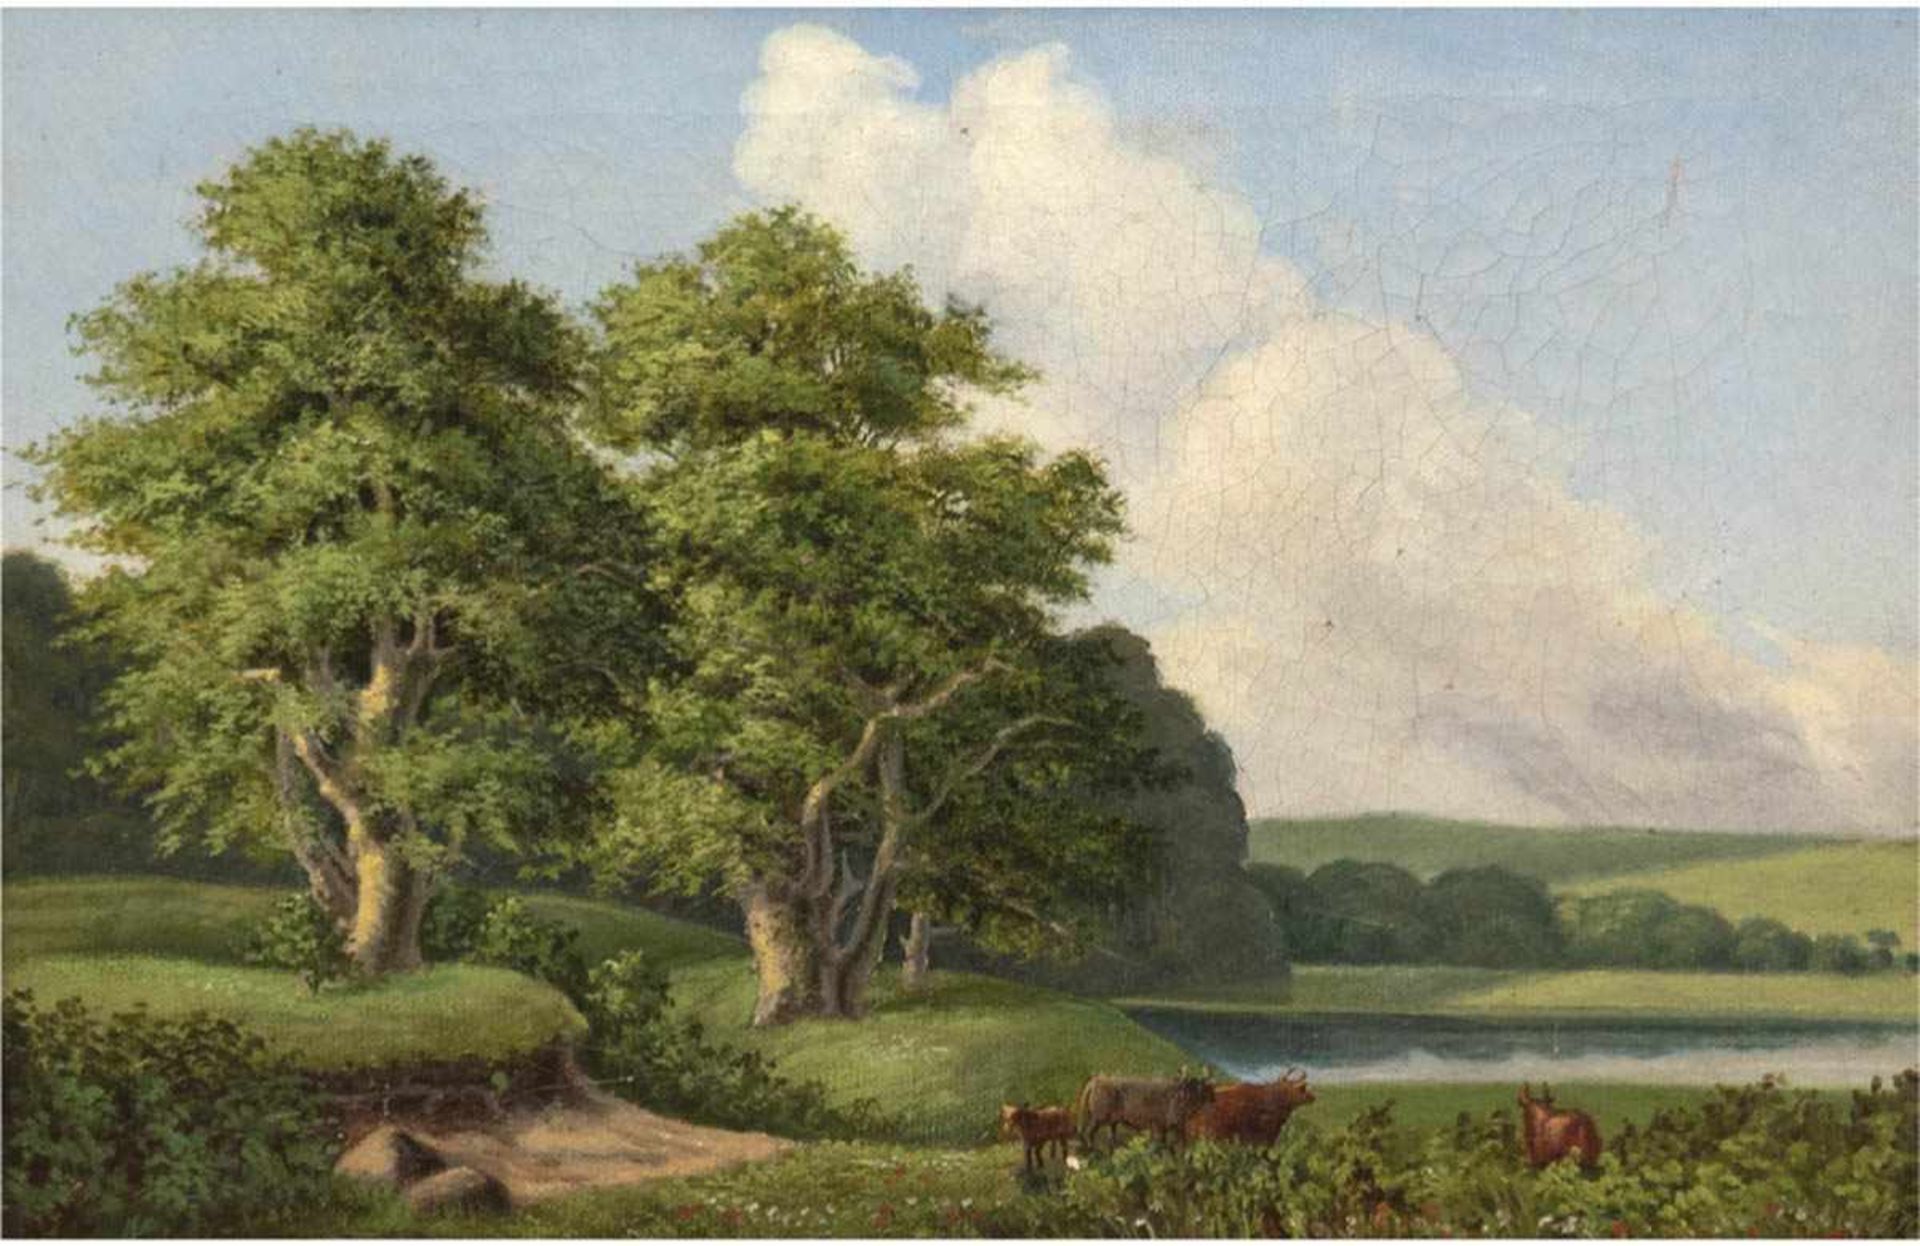 Maler Ende 19. Jh. "Kühe auf Weide am See", Öl/Lw., unsigniert, Craquele, 27x39 cm,Rahmen